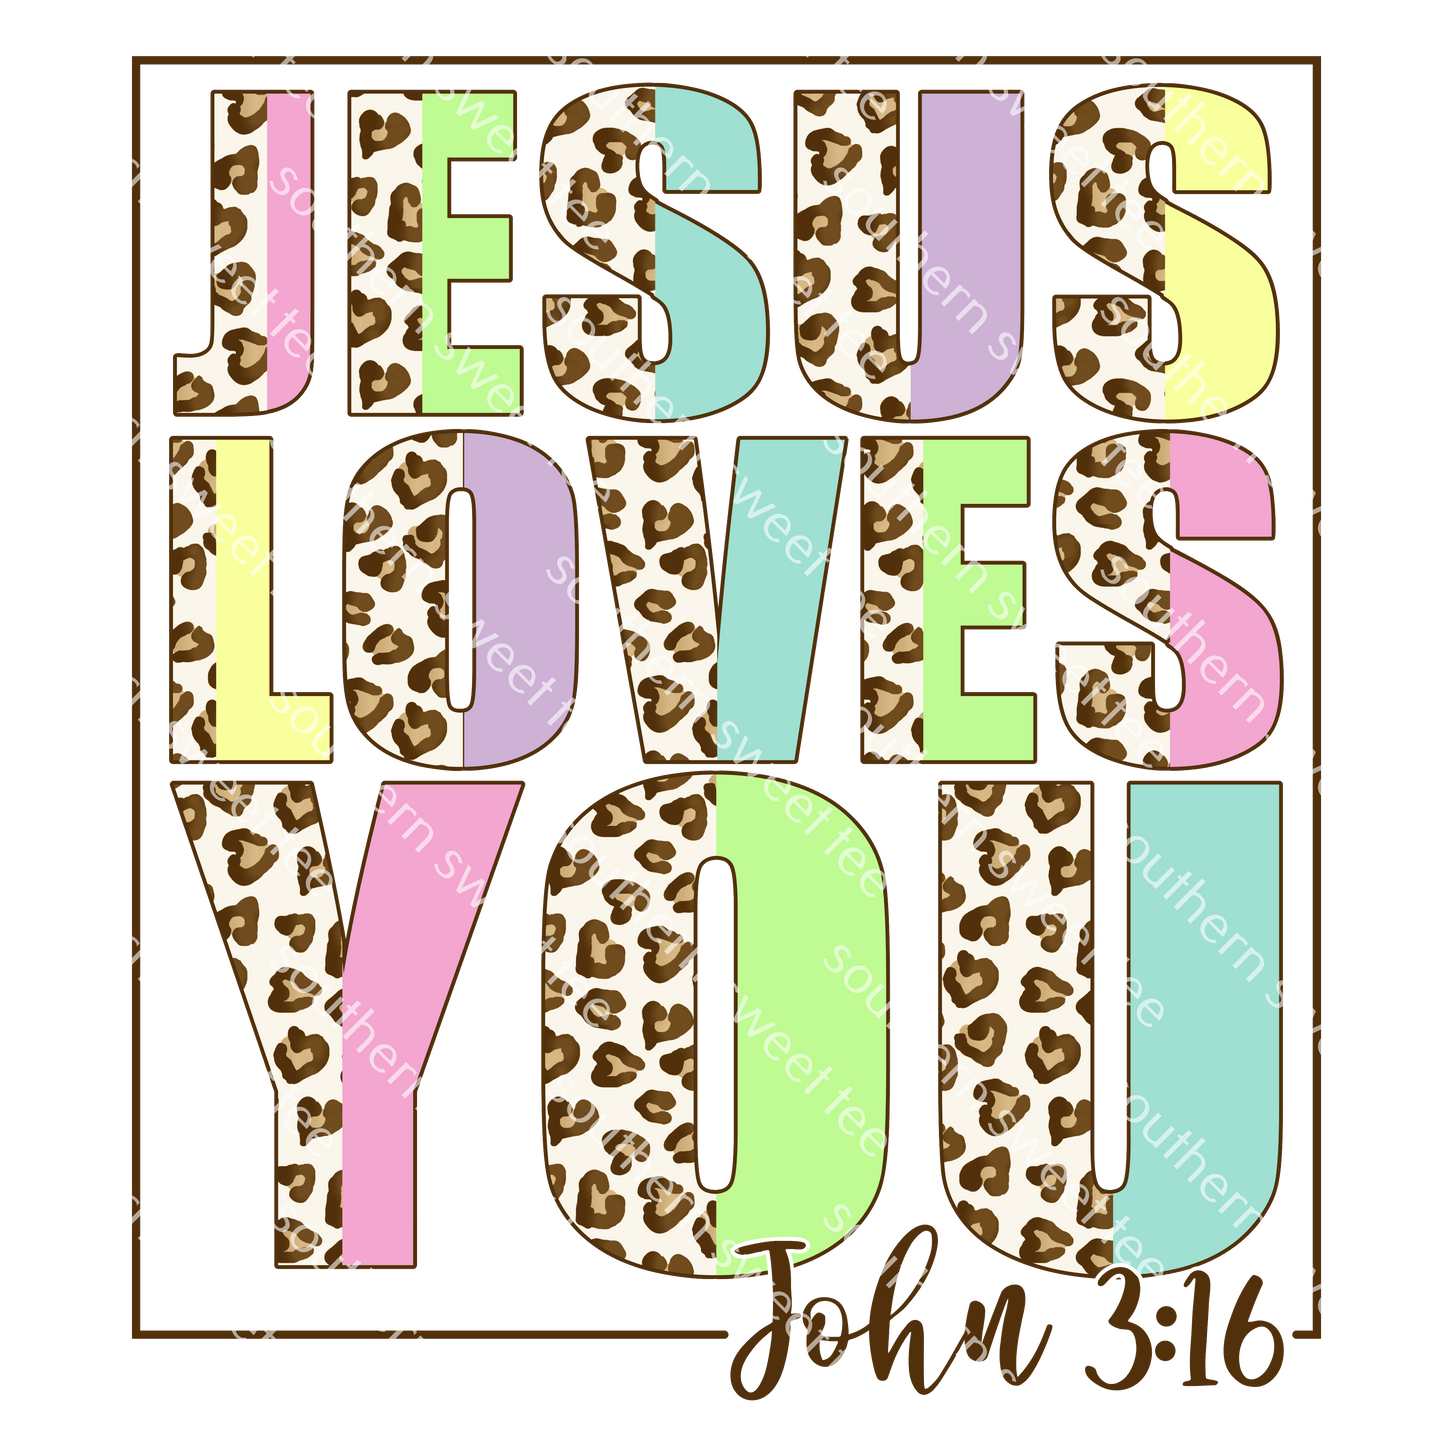 Jesus loves you .ss21